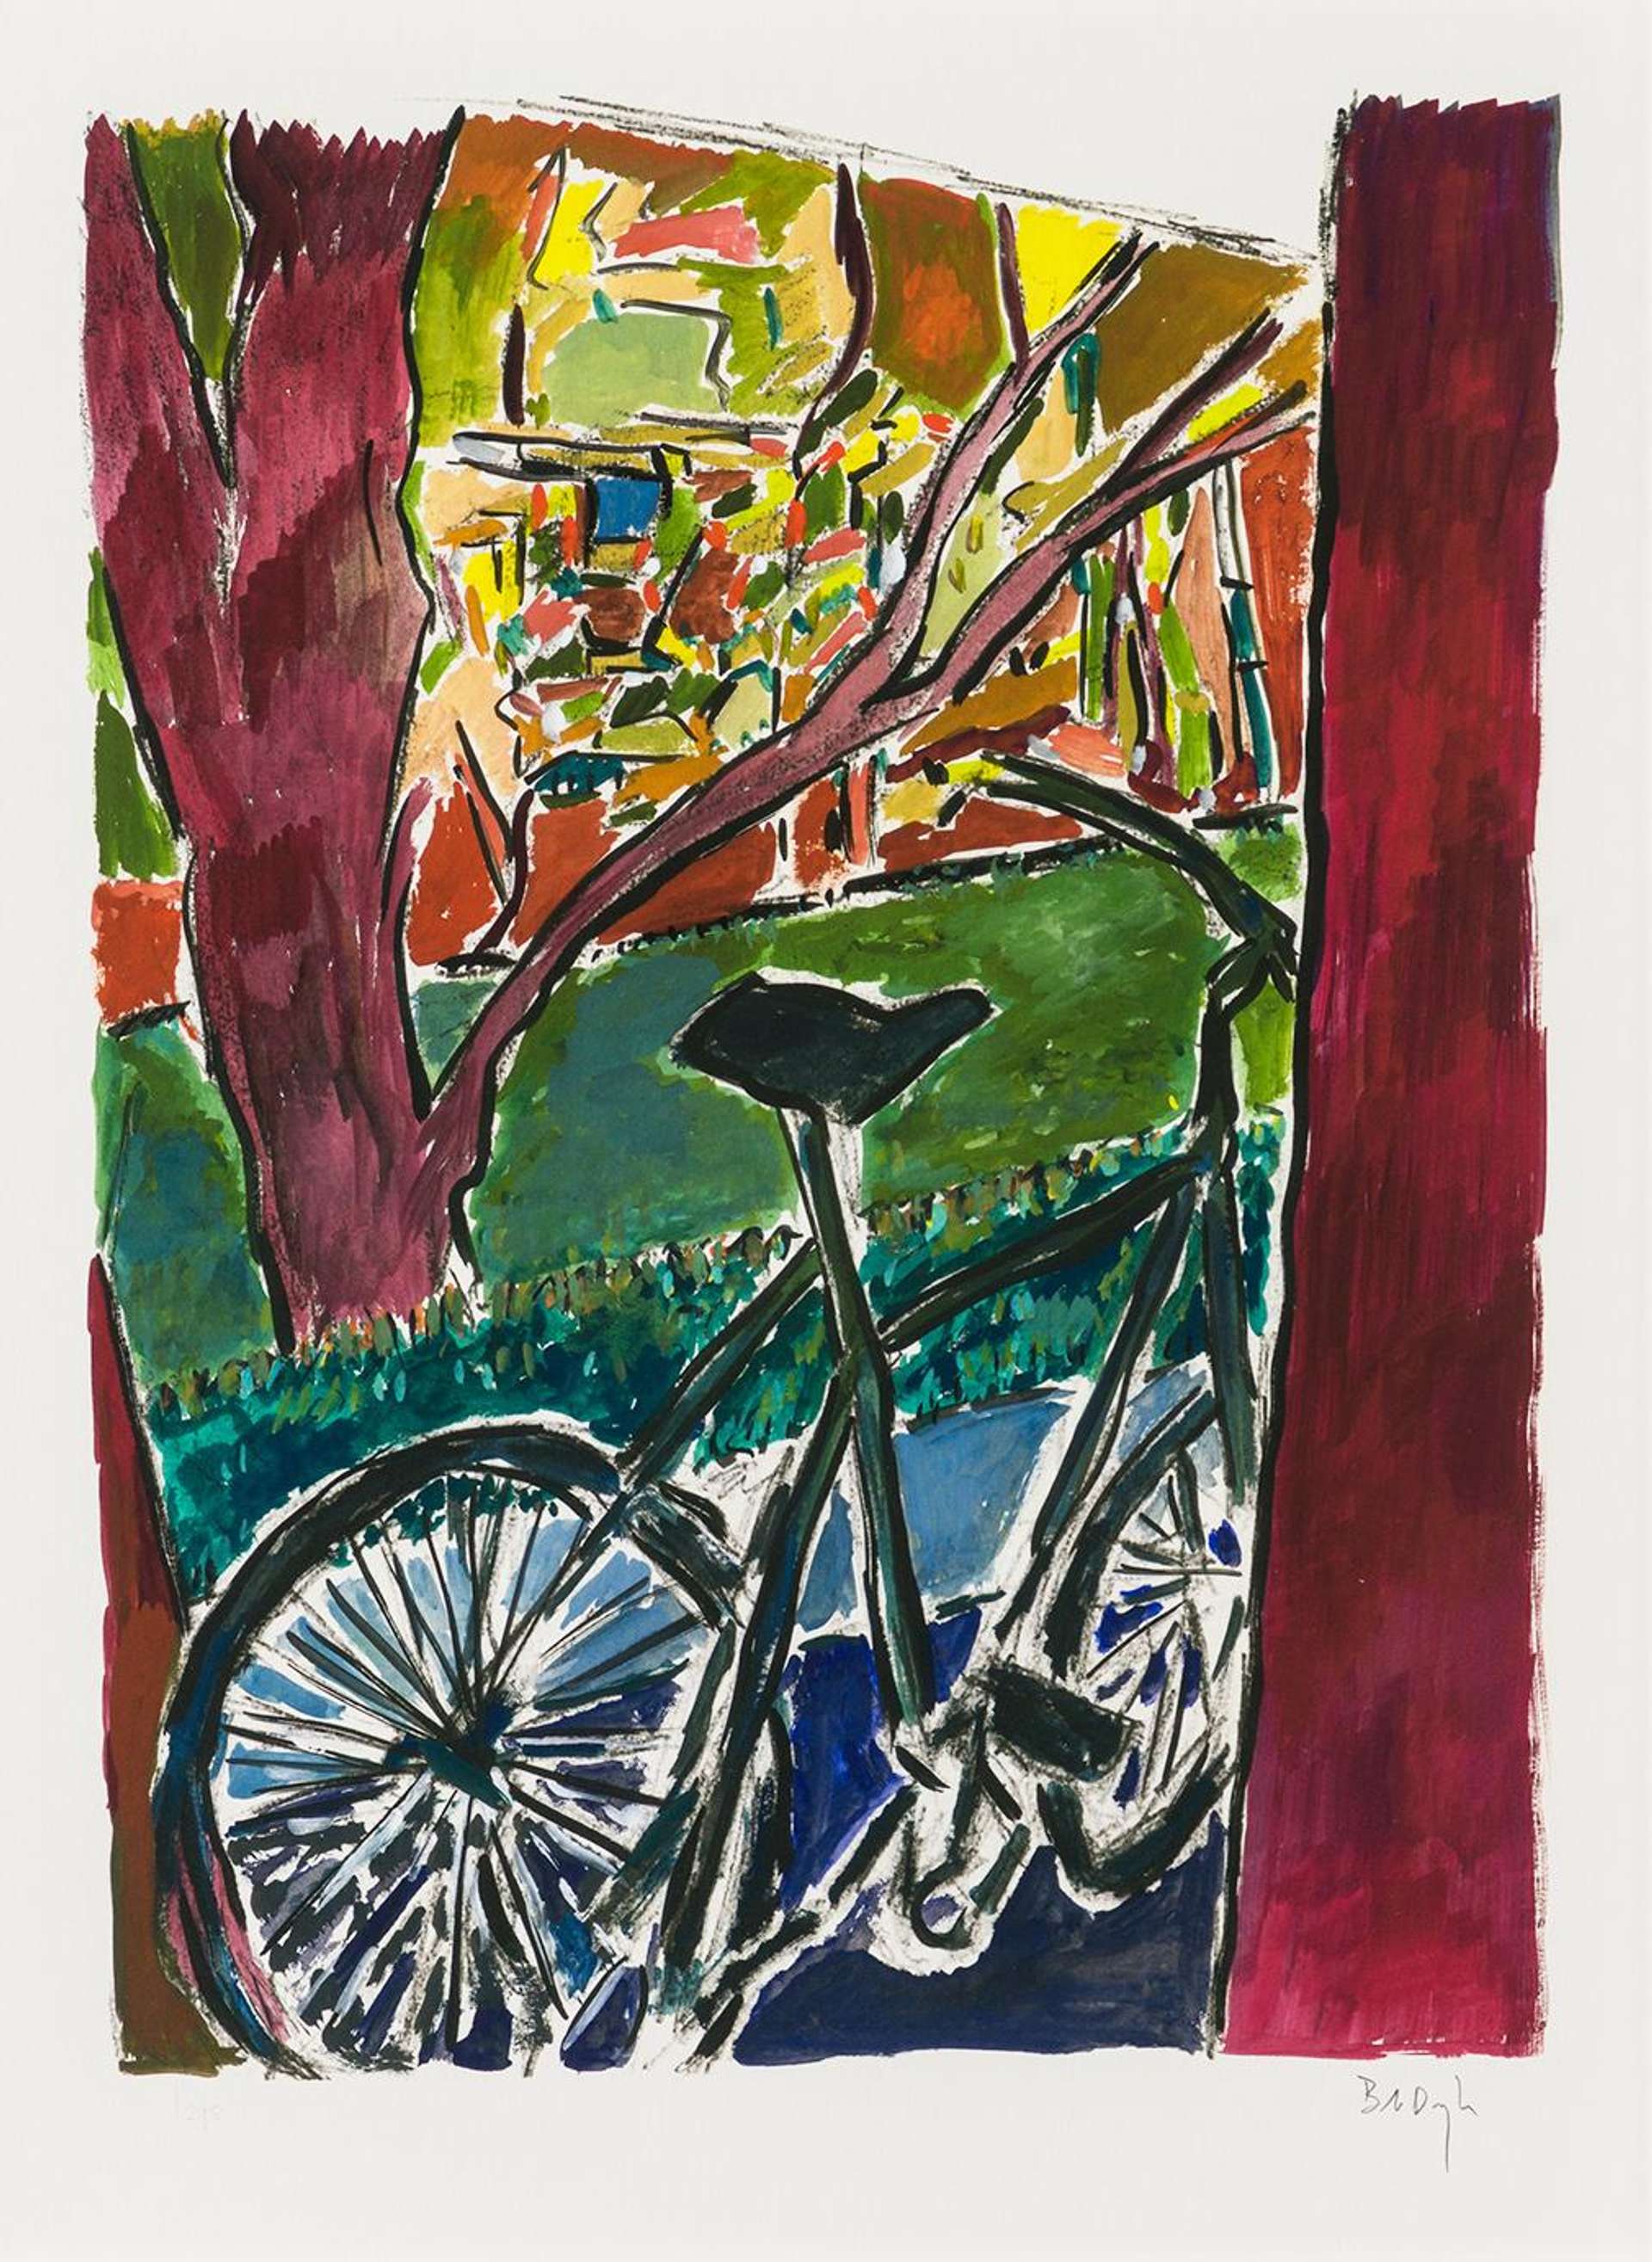 Bicycle (2012) - Signed Print by Bob Dylan 2012 - MyArtBroker